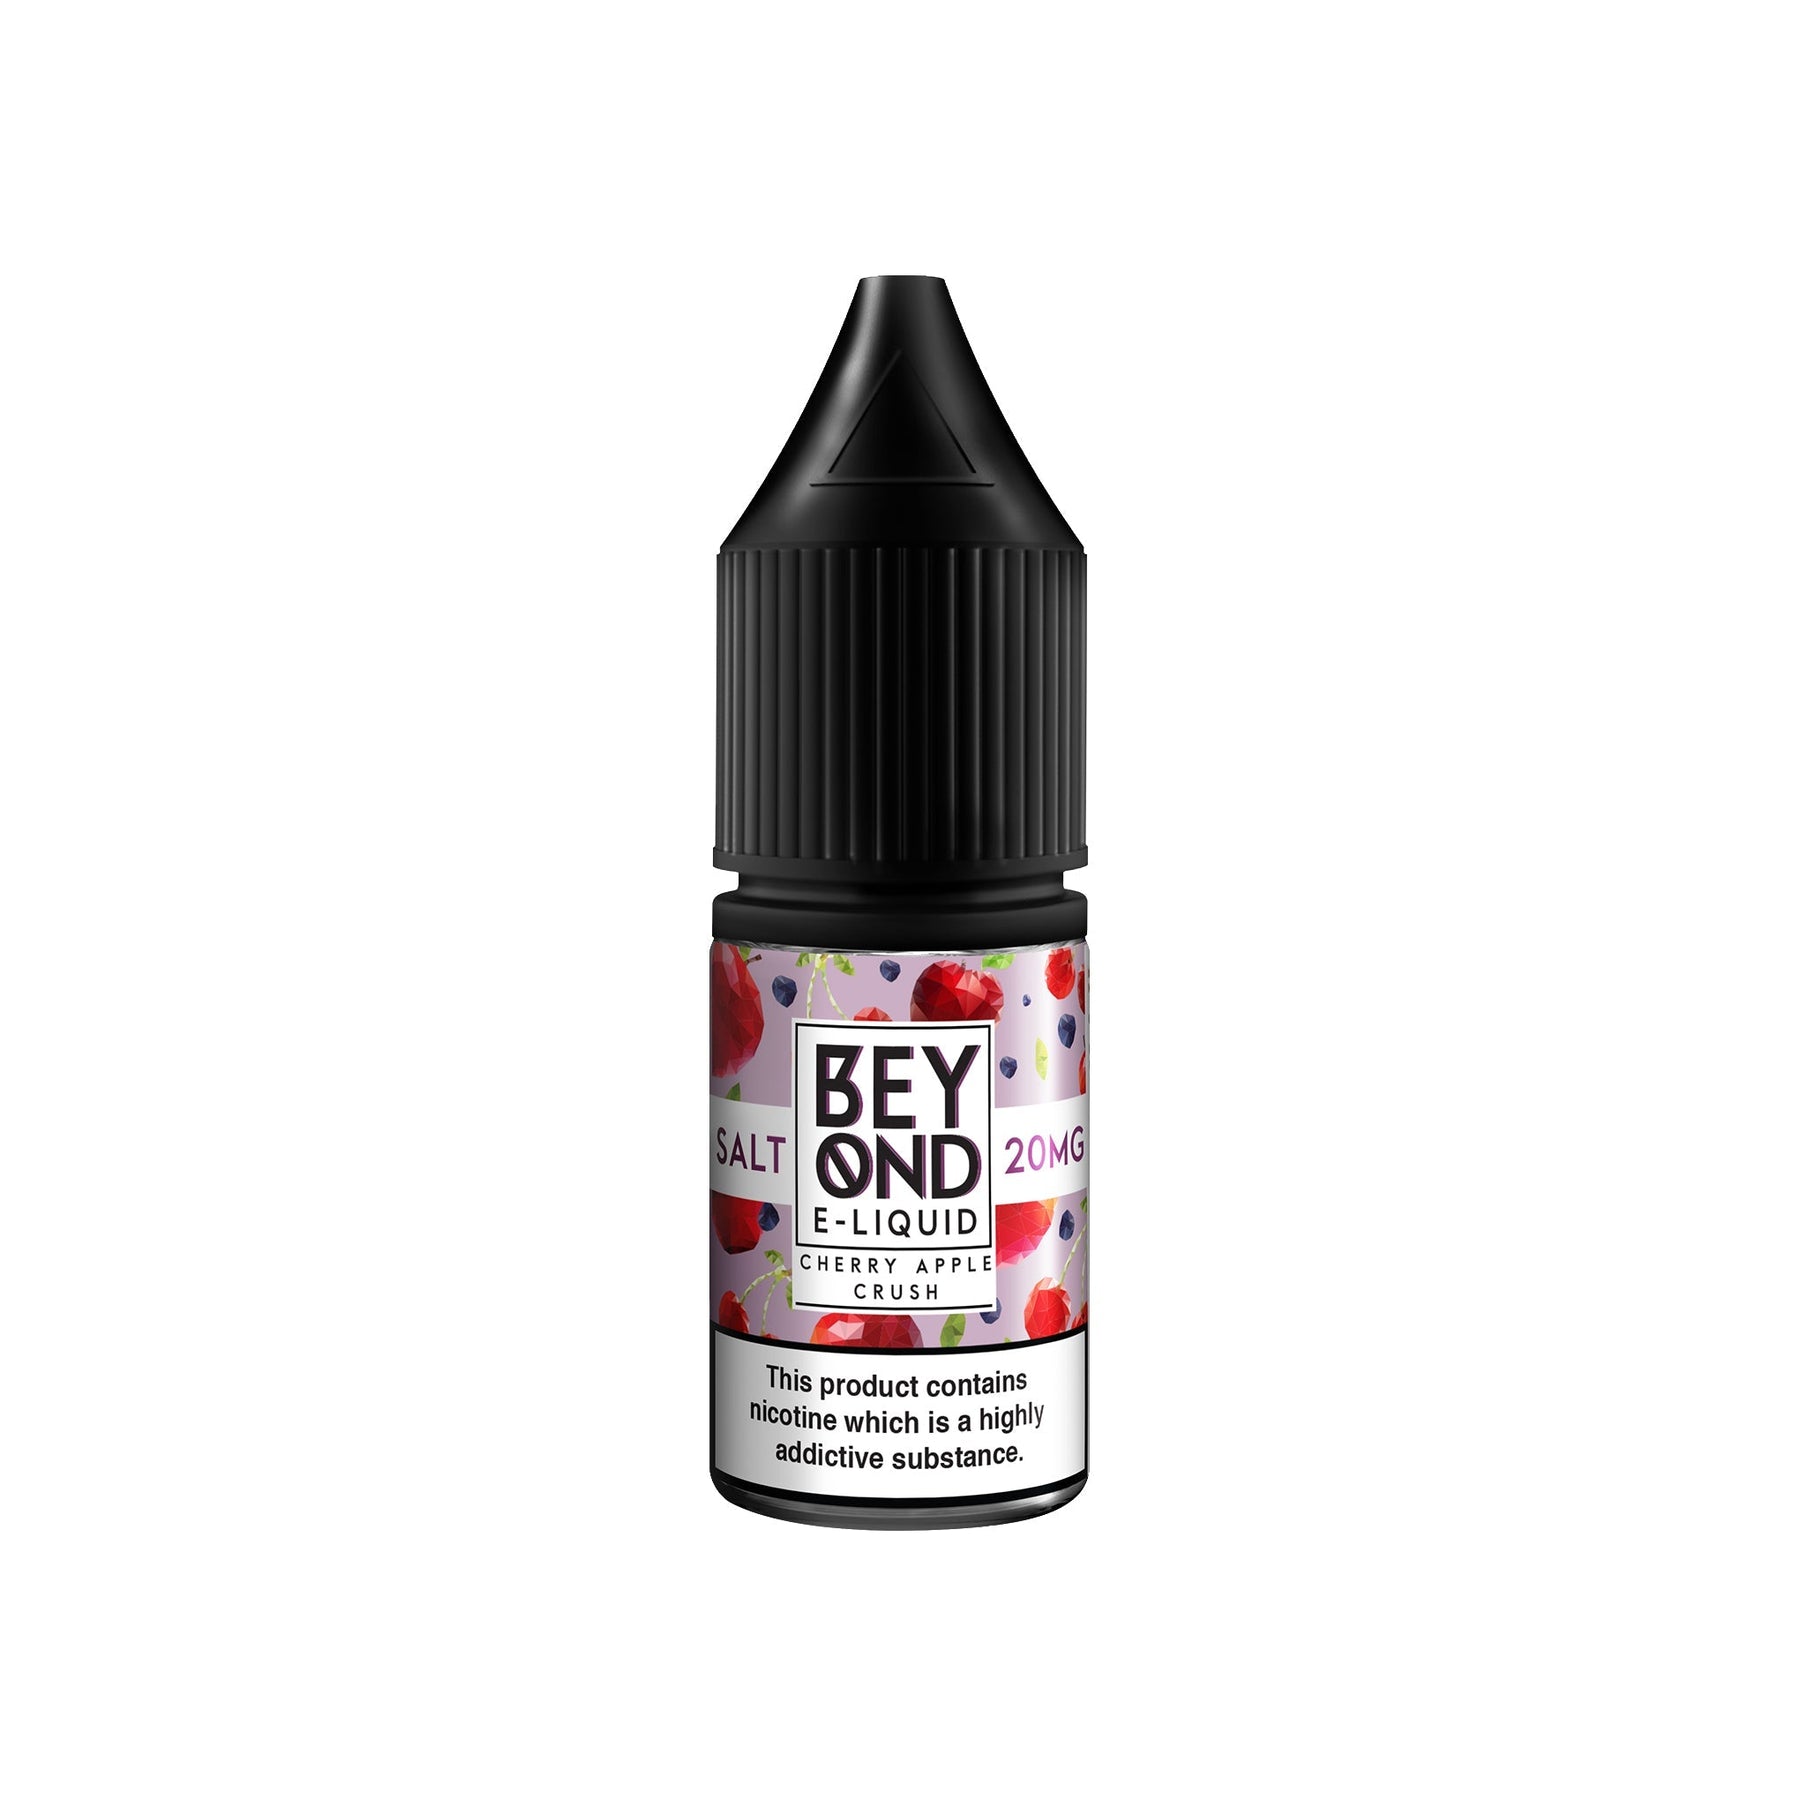 IVG Beyond Nicotine Salt E-Liquid Cherry Apple Crush 